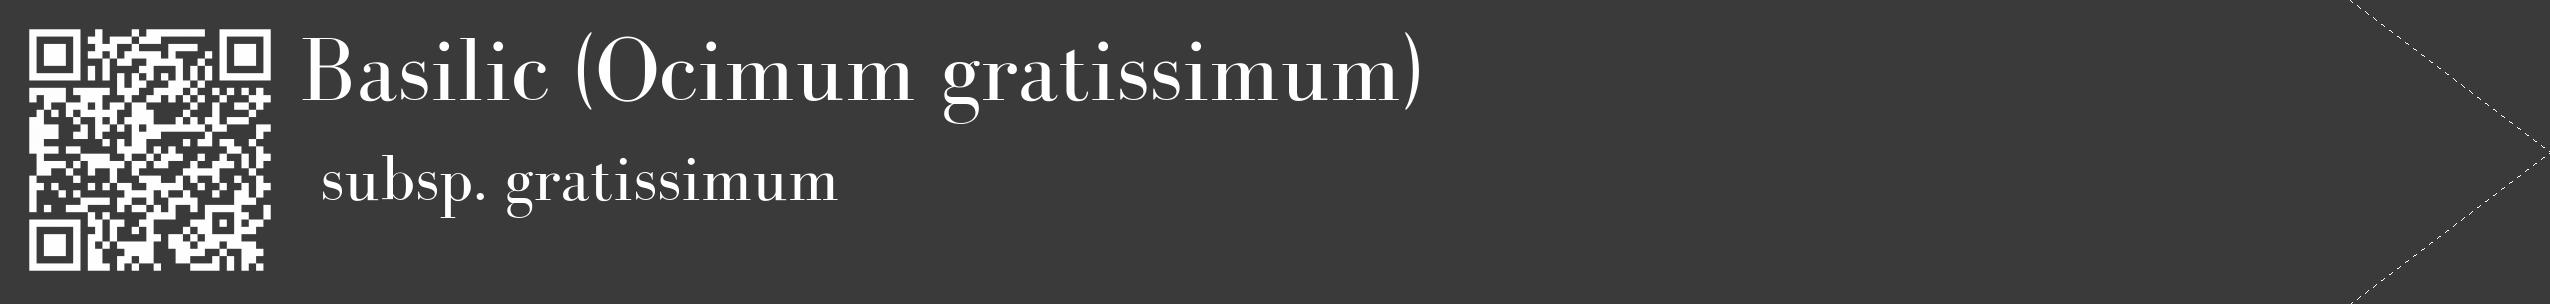 Étiquette de : Ocimum gratissimum subsp. gratissimum - format c - style blanche8_simple_simplebod avec qrcode et comestibilité